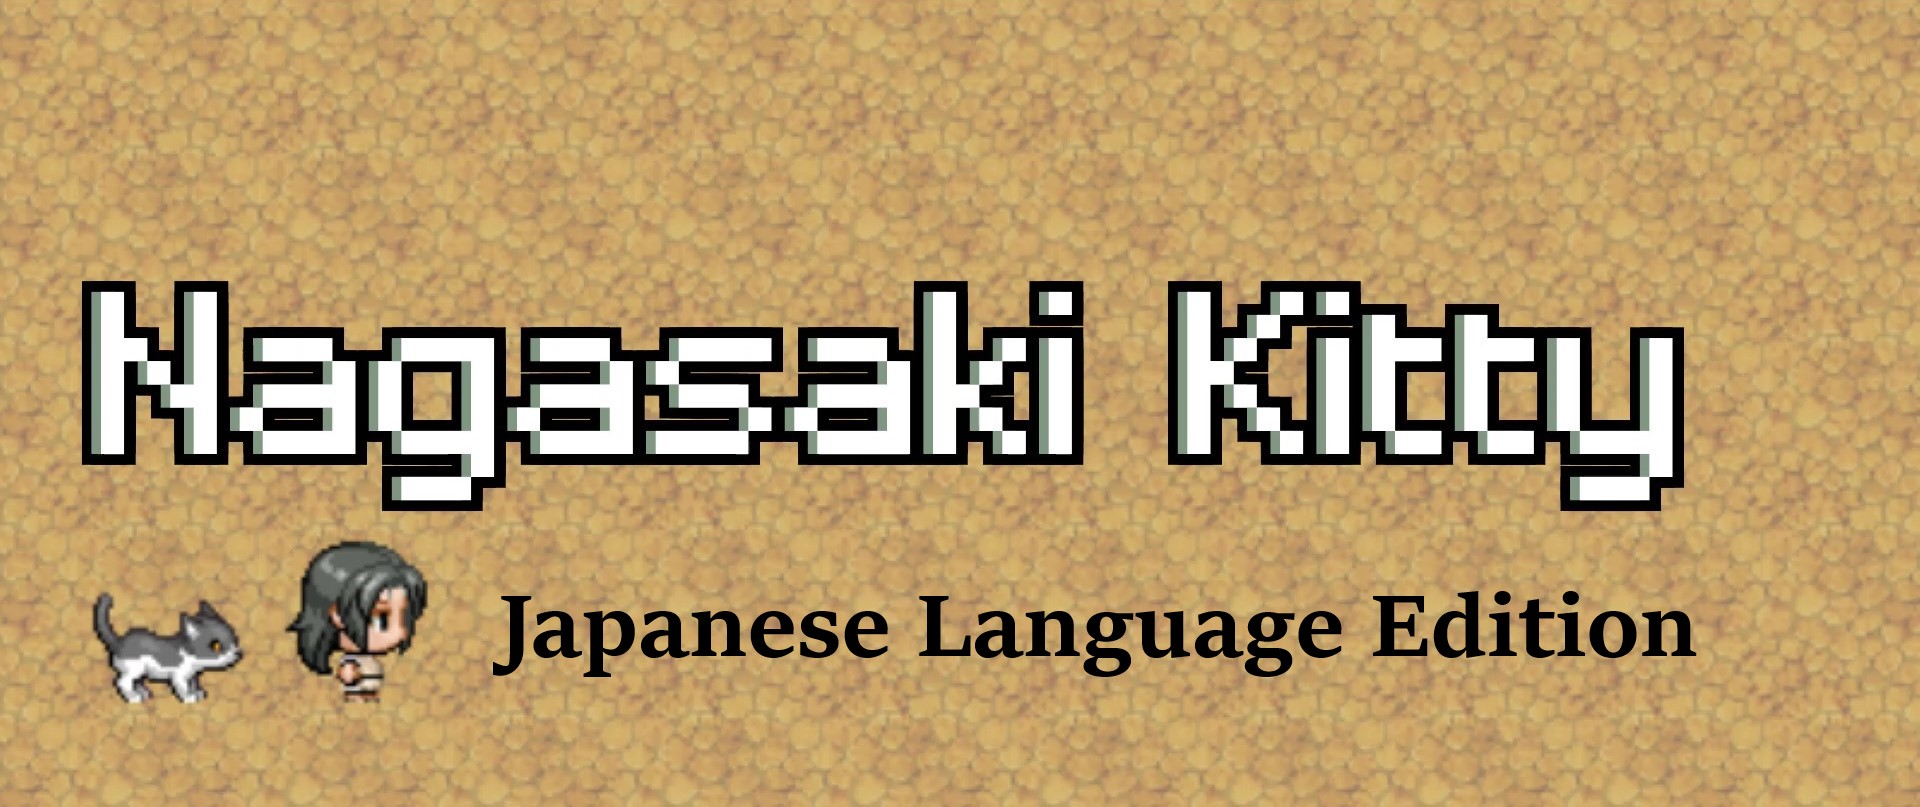 Nagasaki Kitty - Japanese Language Edition